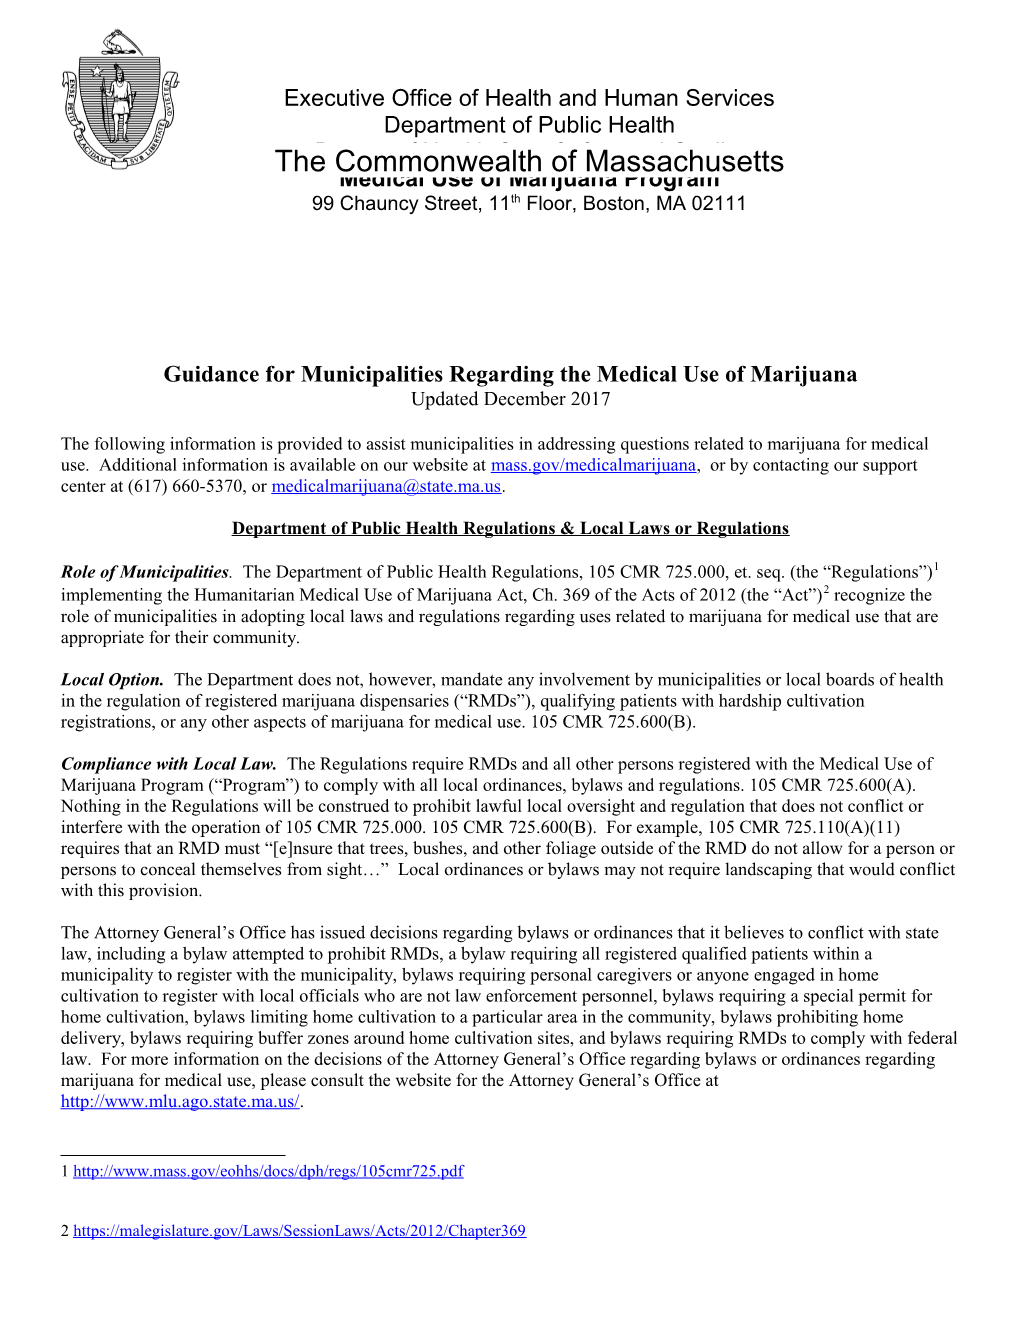 Guidance for Municipalities Regarding the Medical Use of Marijuana